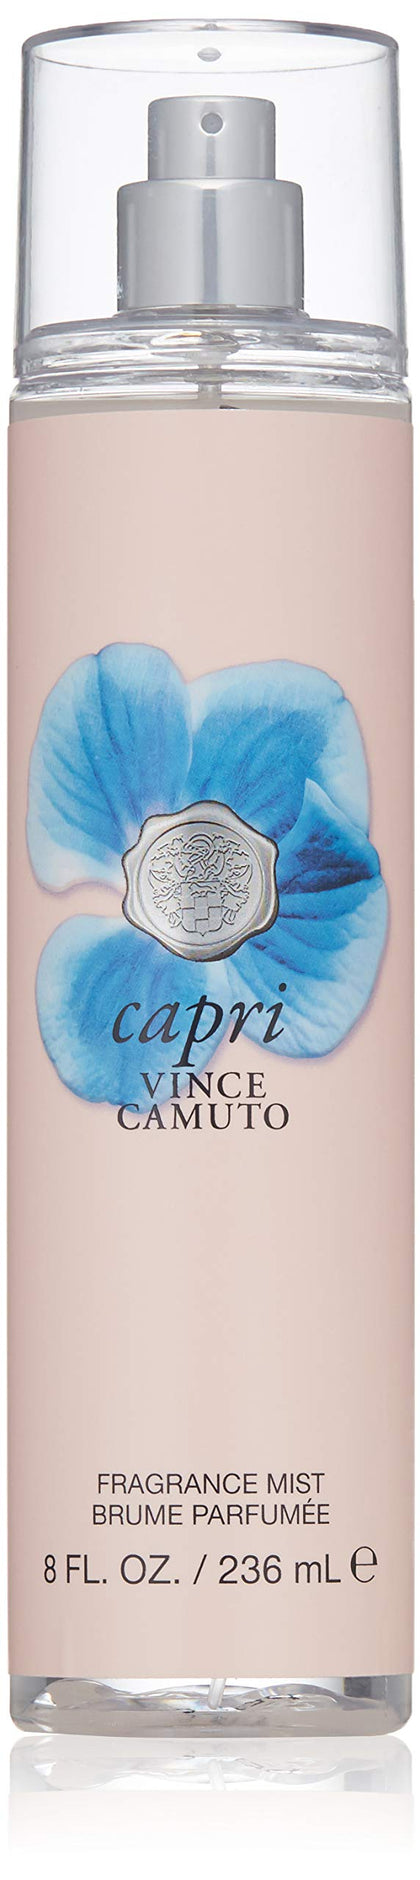 Vince Camuto Capri Body Fragrance Spray Mist, 8 Fl Oz